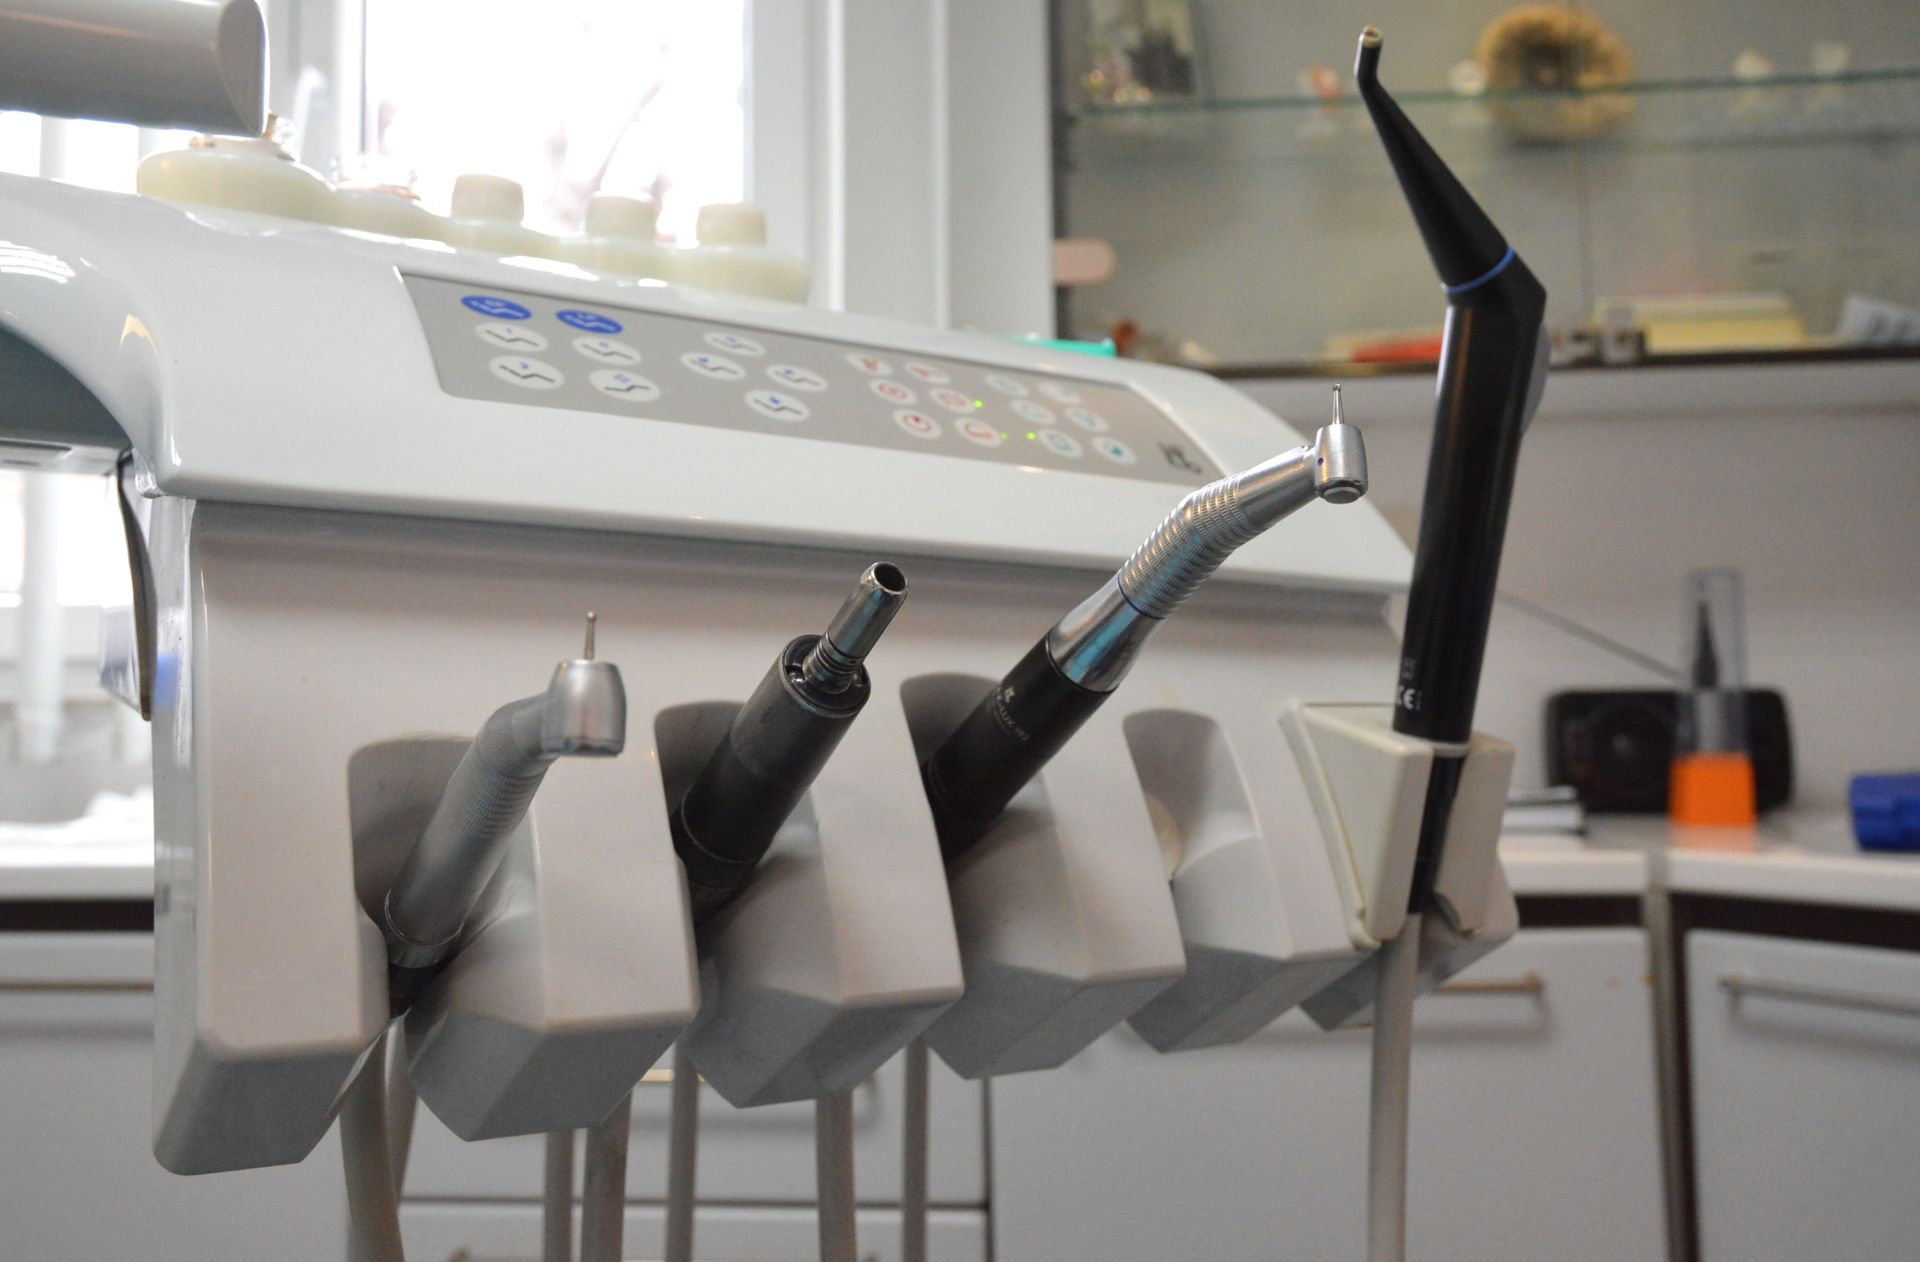 27.03.2015., Bjelovar, Stomatoloska ordinacija - Pokvareni zubi u konacnici mogu dovesti do nosenja zubnih proteza. 
Photo: Damir Spehar/PIXSELL